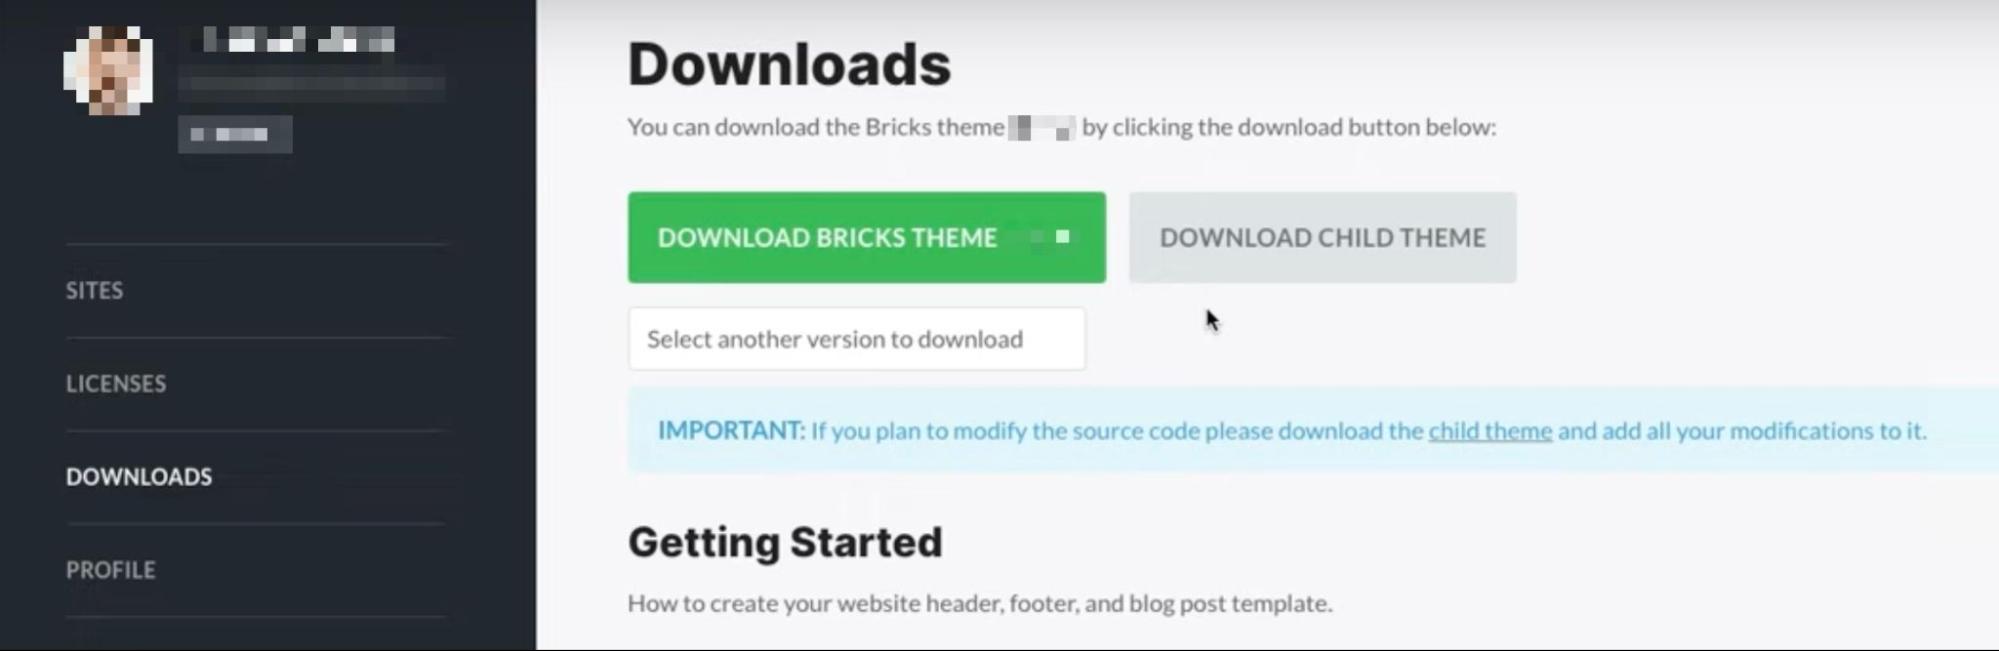 Bricks dashboard to download Bricks theme